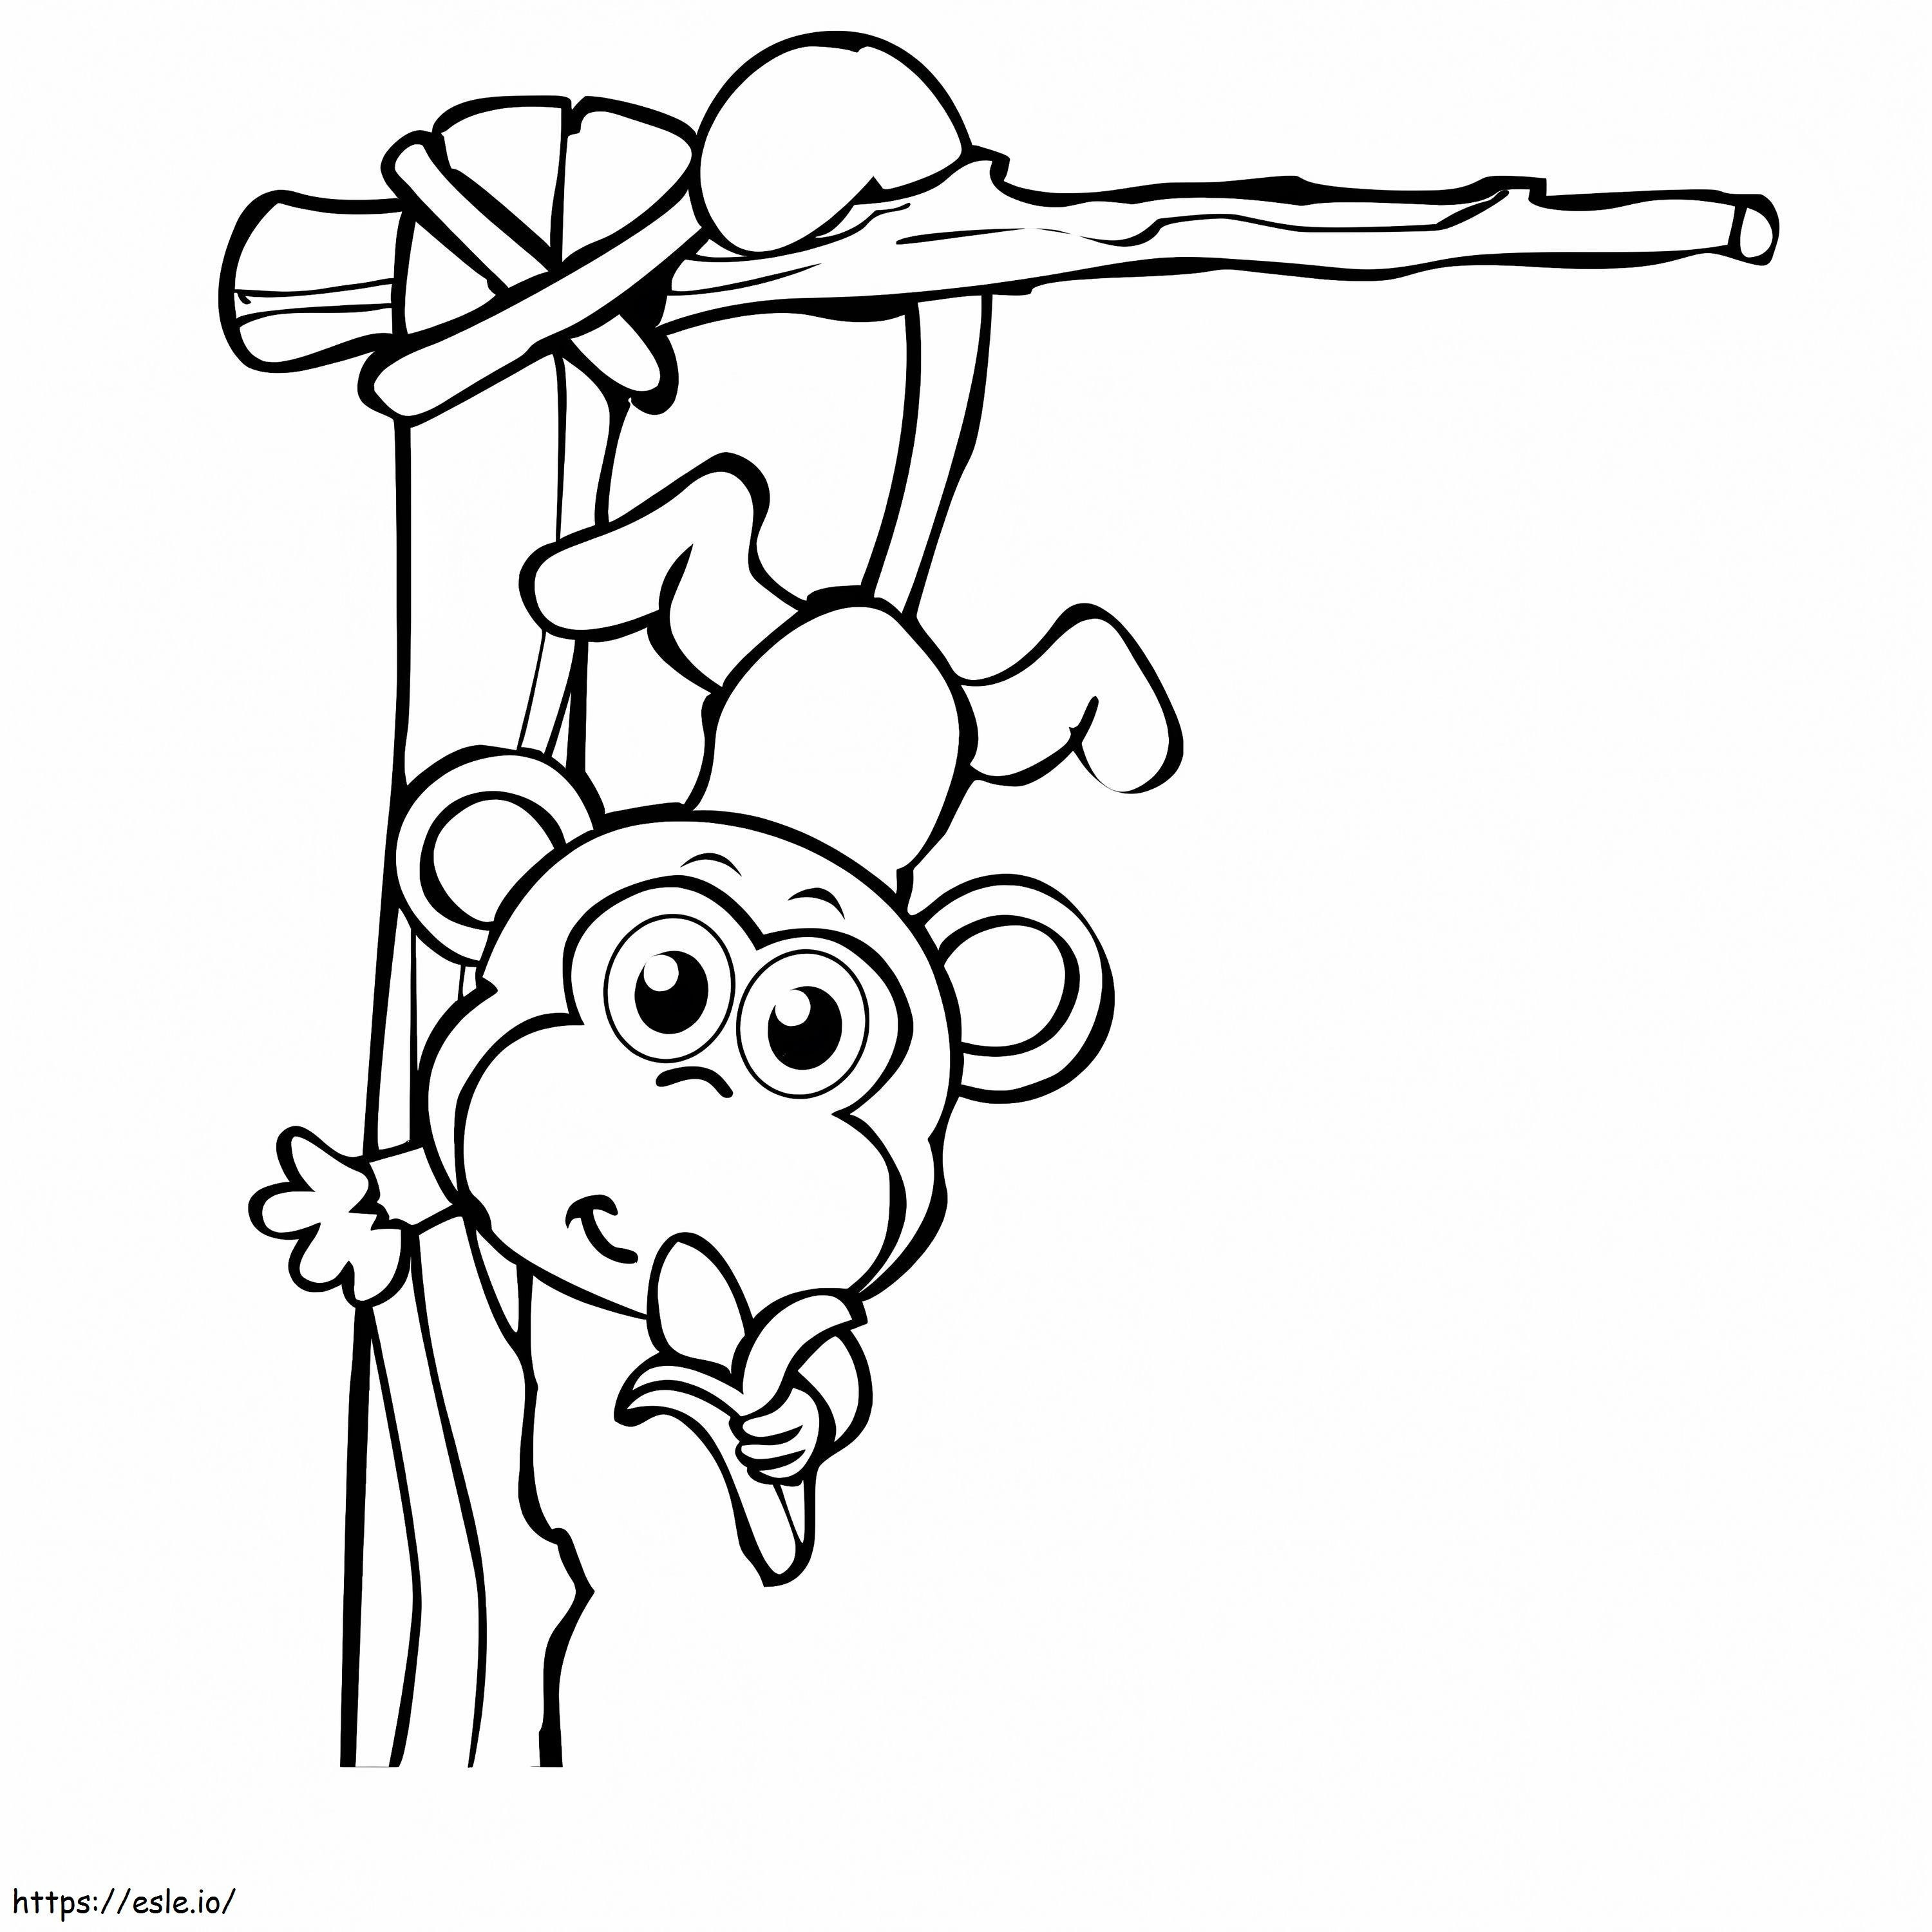 Monkey Climbing Trees And Eating Banana coloring page